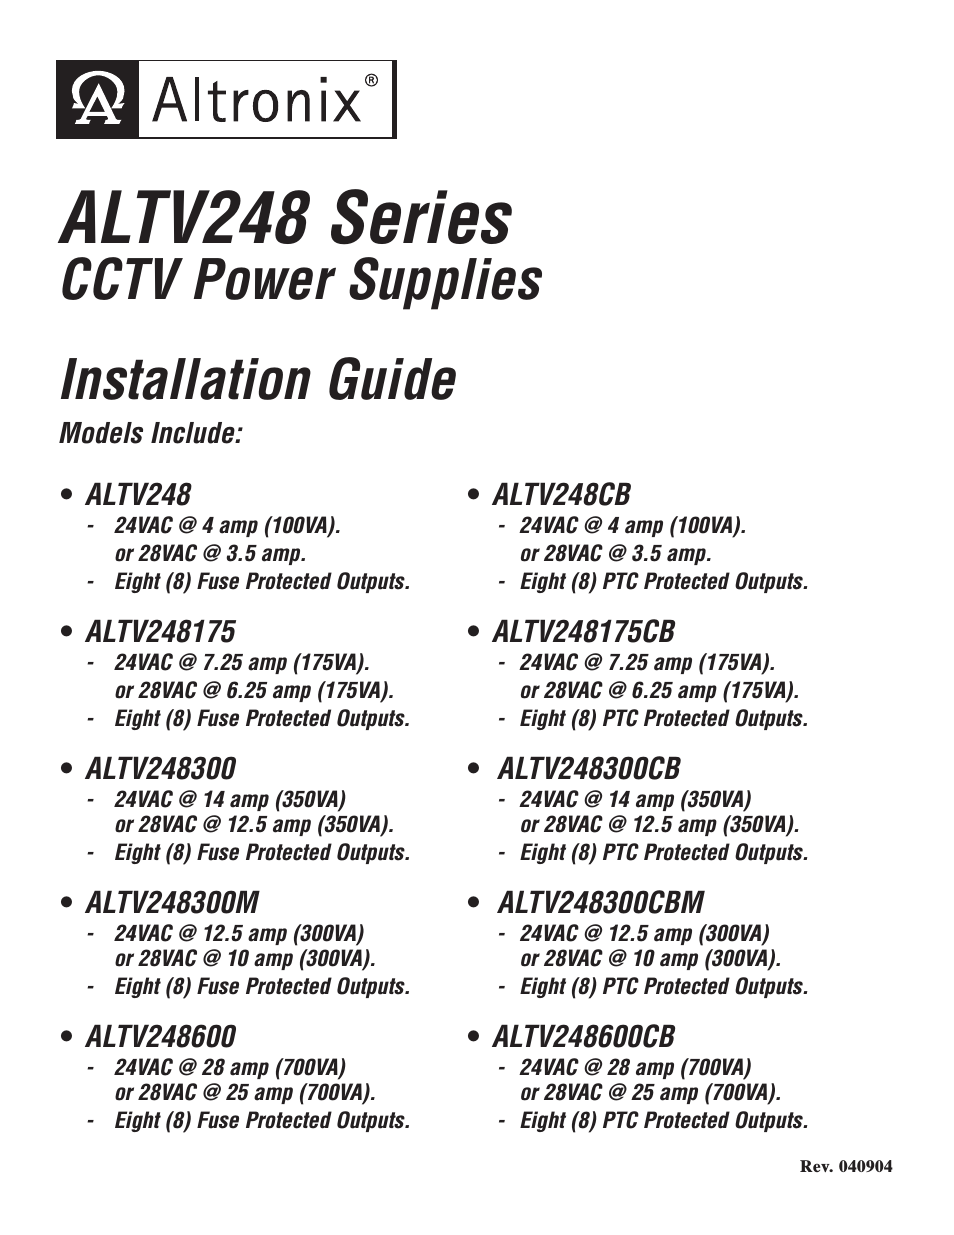 ALTV248 Series Installation Instructions